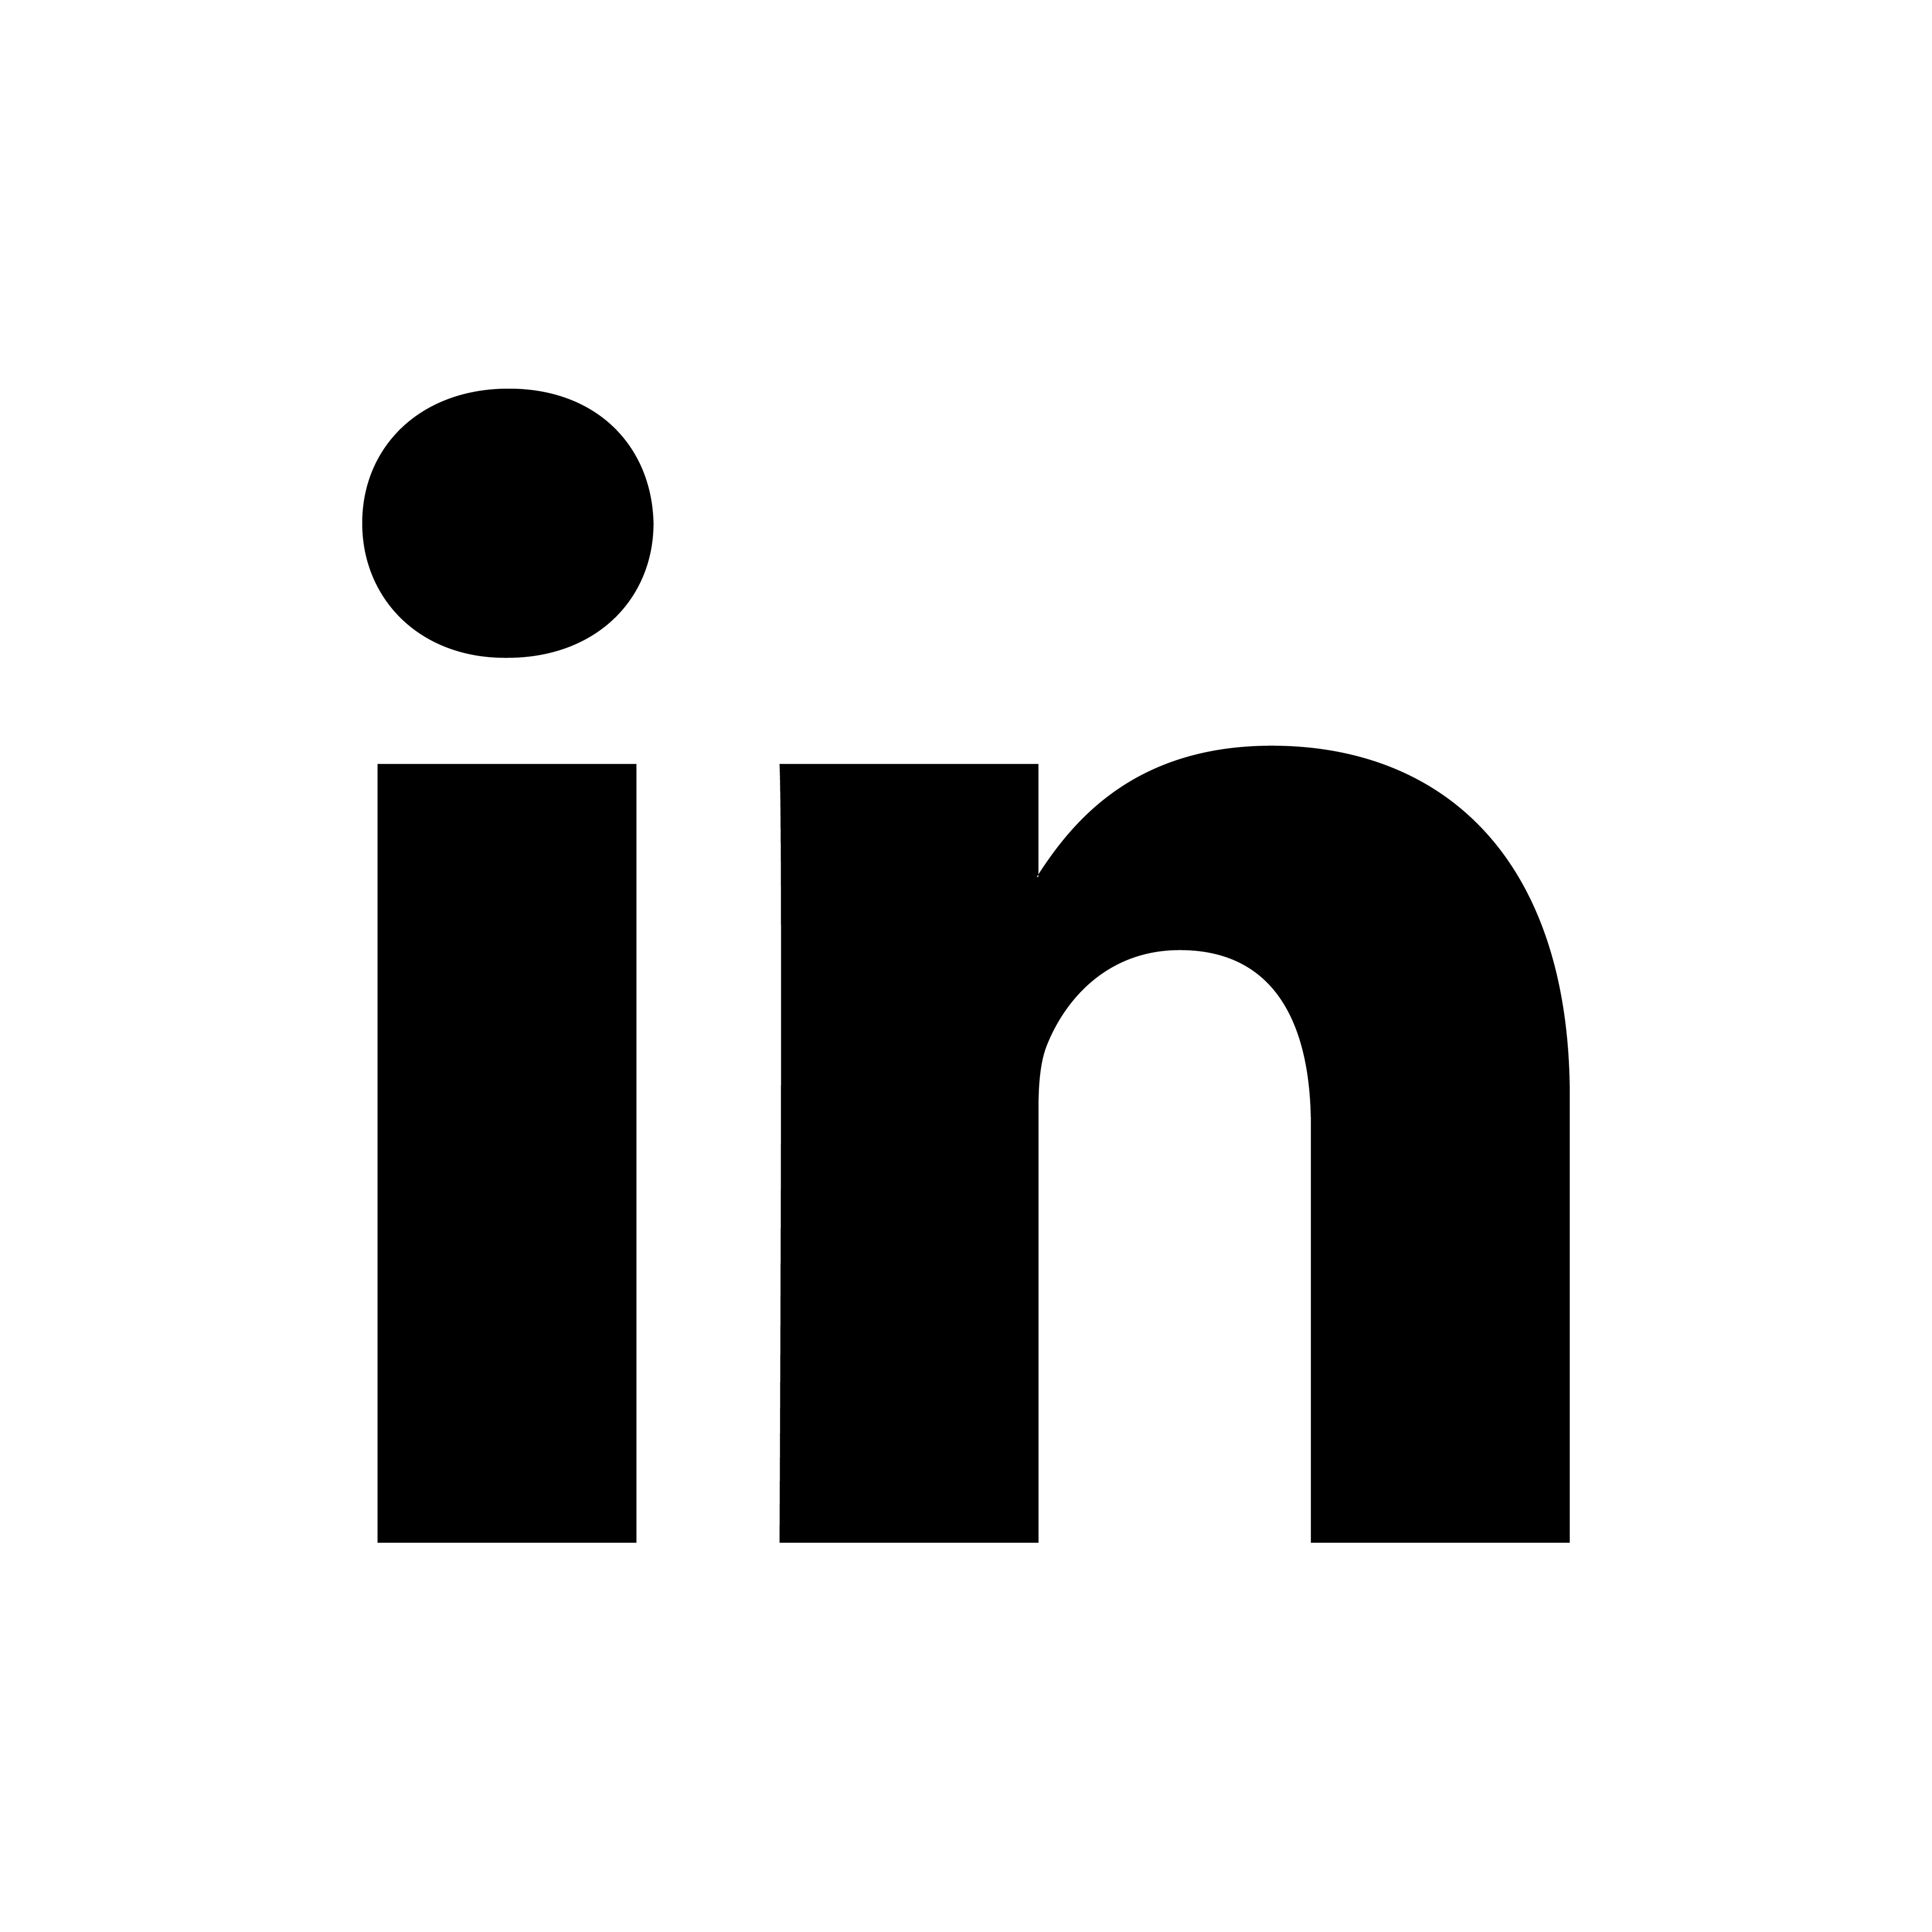 LinkedIn in logo PNG transparant